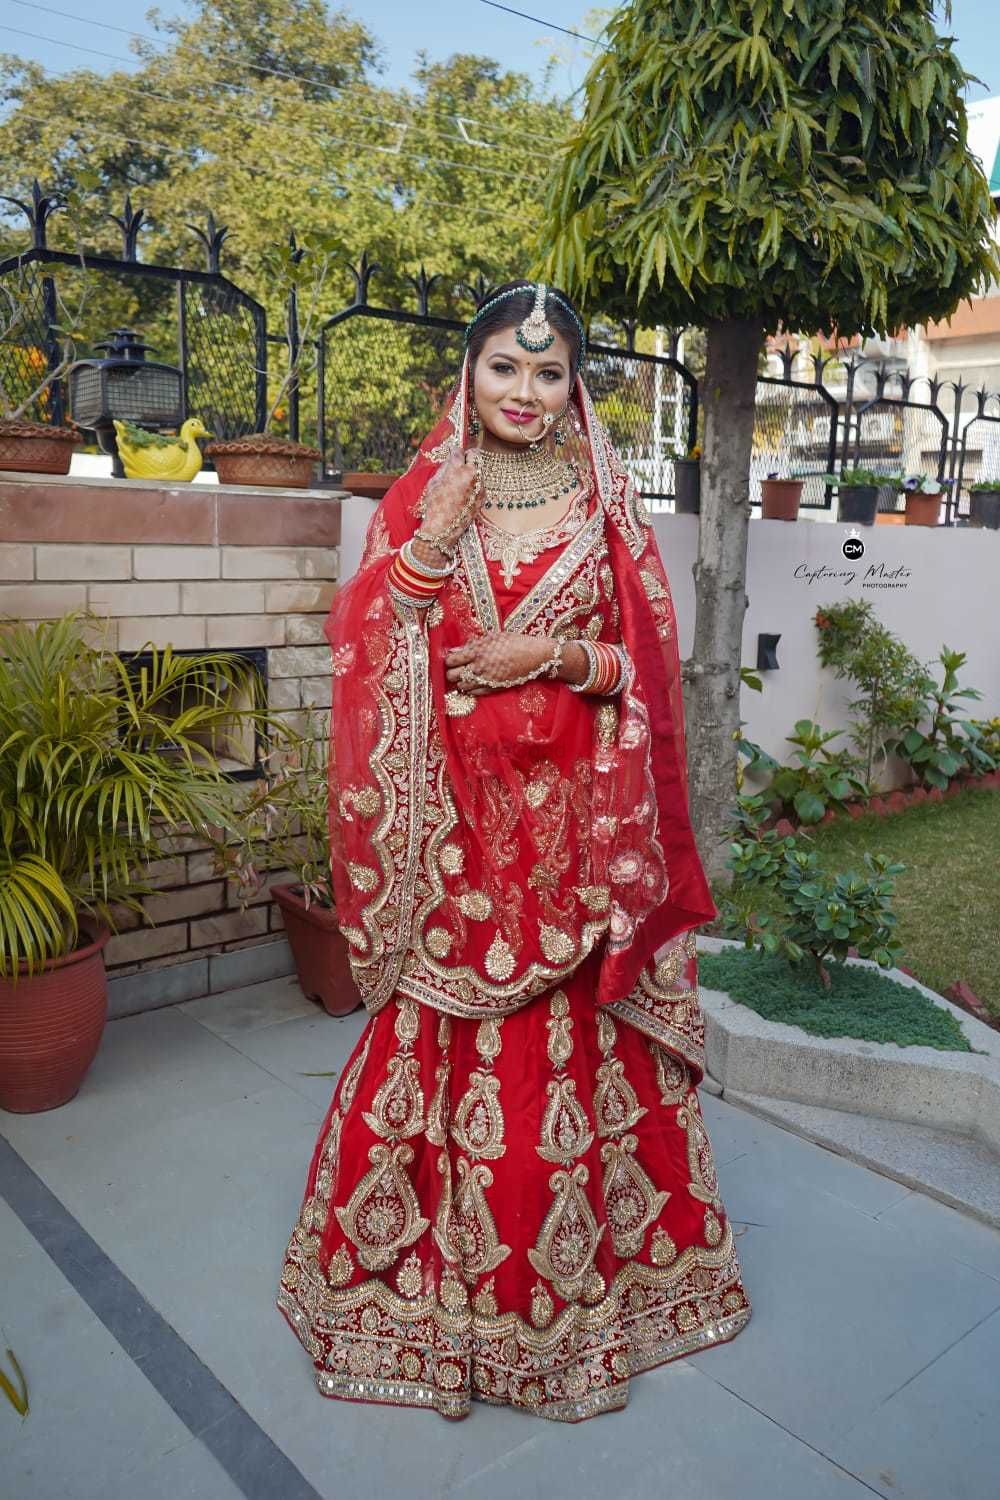 Photo From Bride Jashana - By Definning Looks